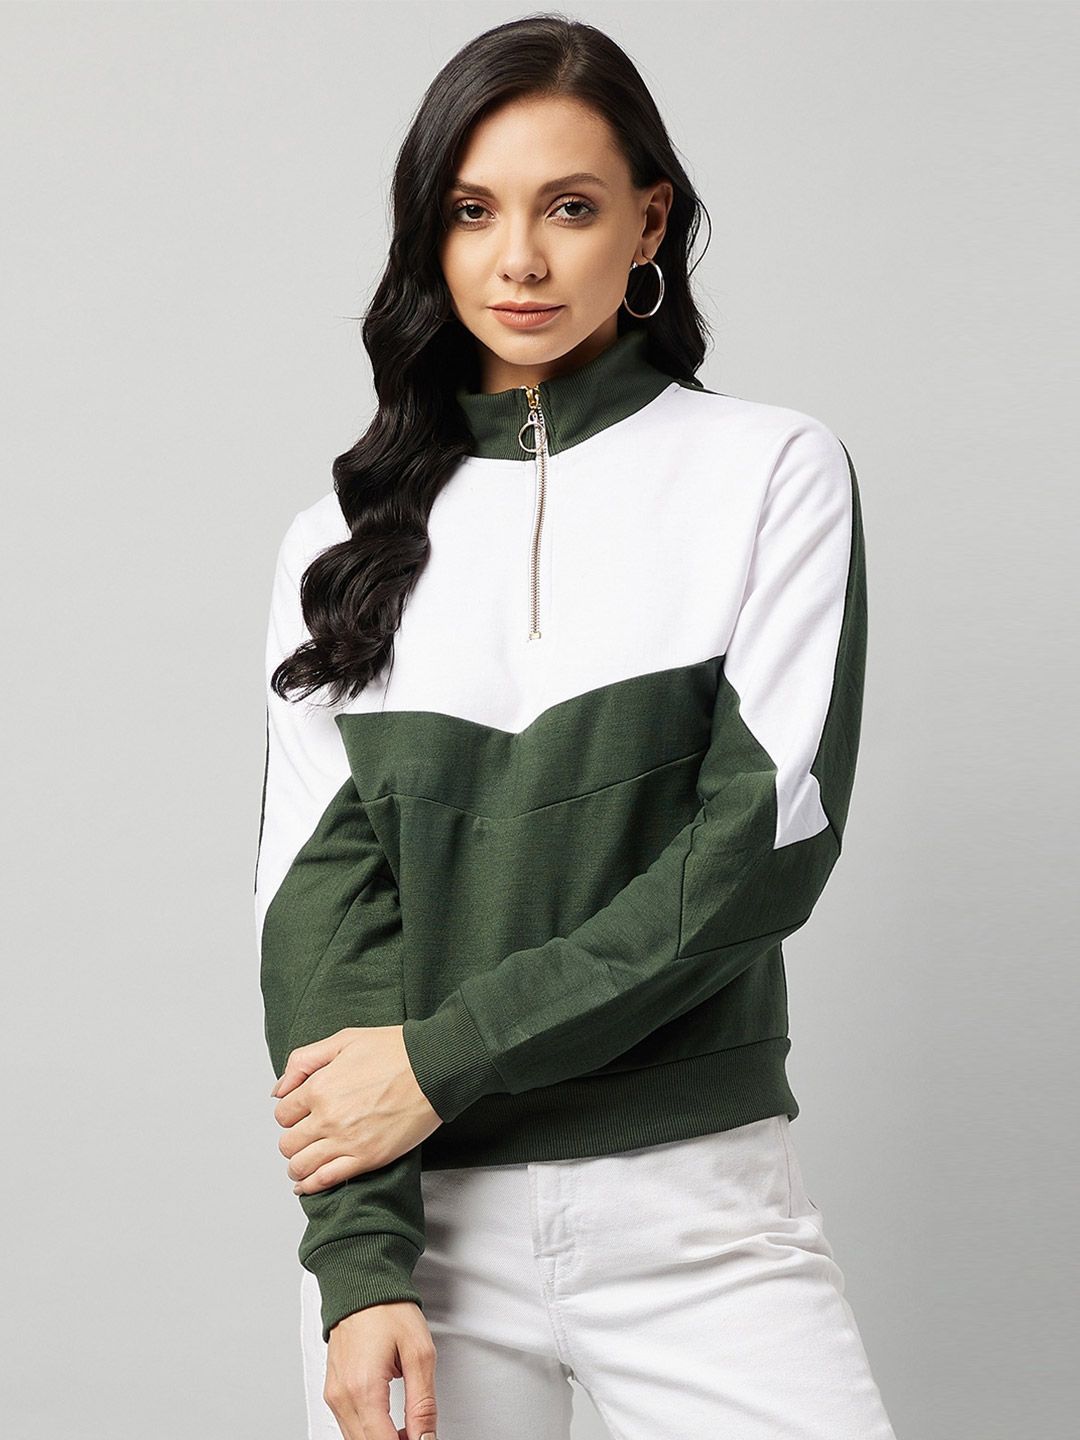 Marie Claire Women White & Green Colourblocked Fleece Sweatshirt Price in India